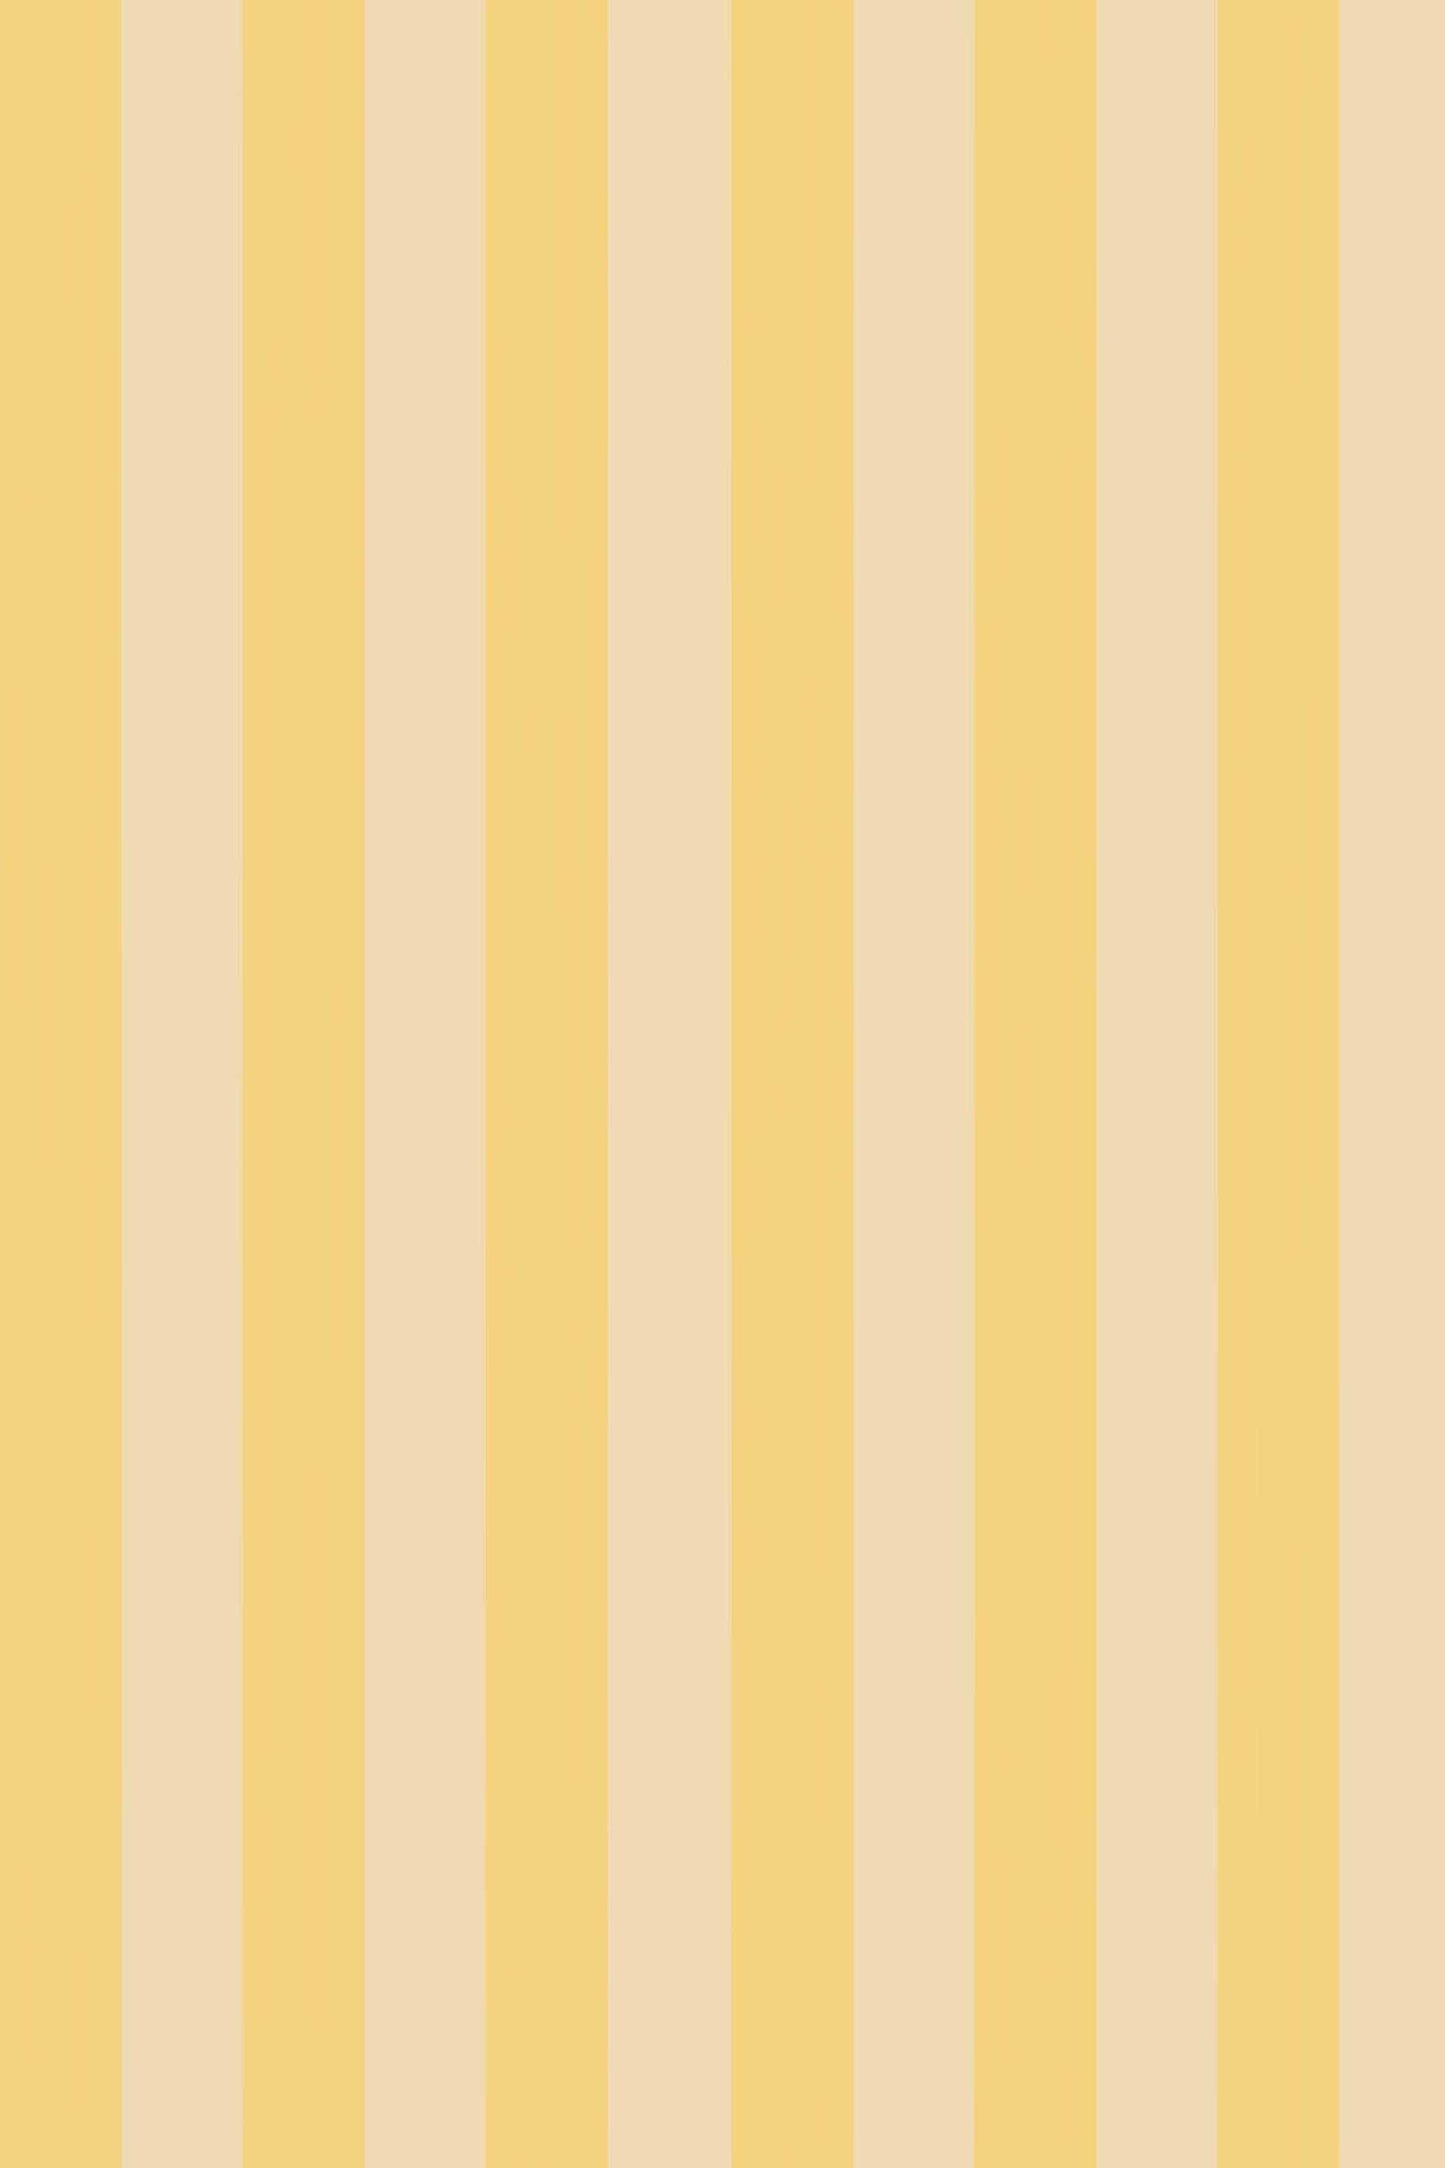 Farrow and Ball Wallpaper Plain Stripe 1139